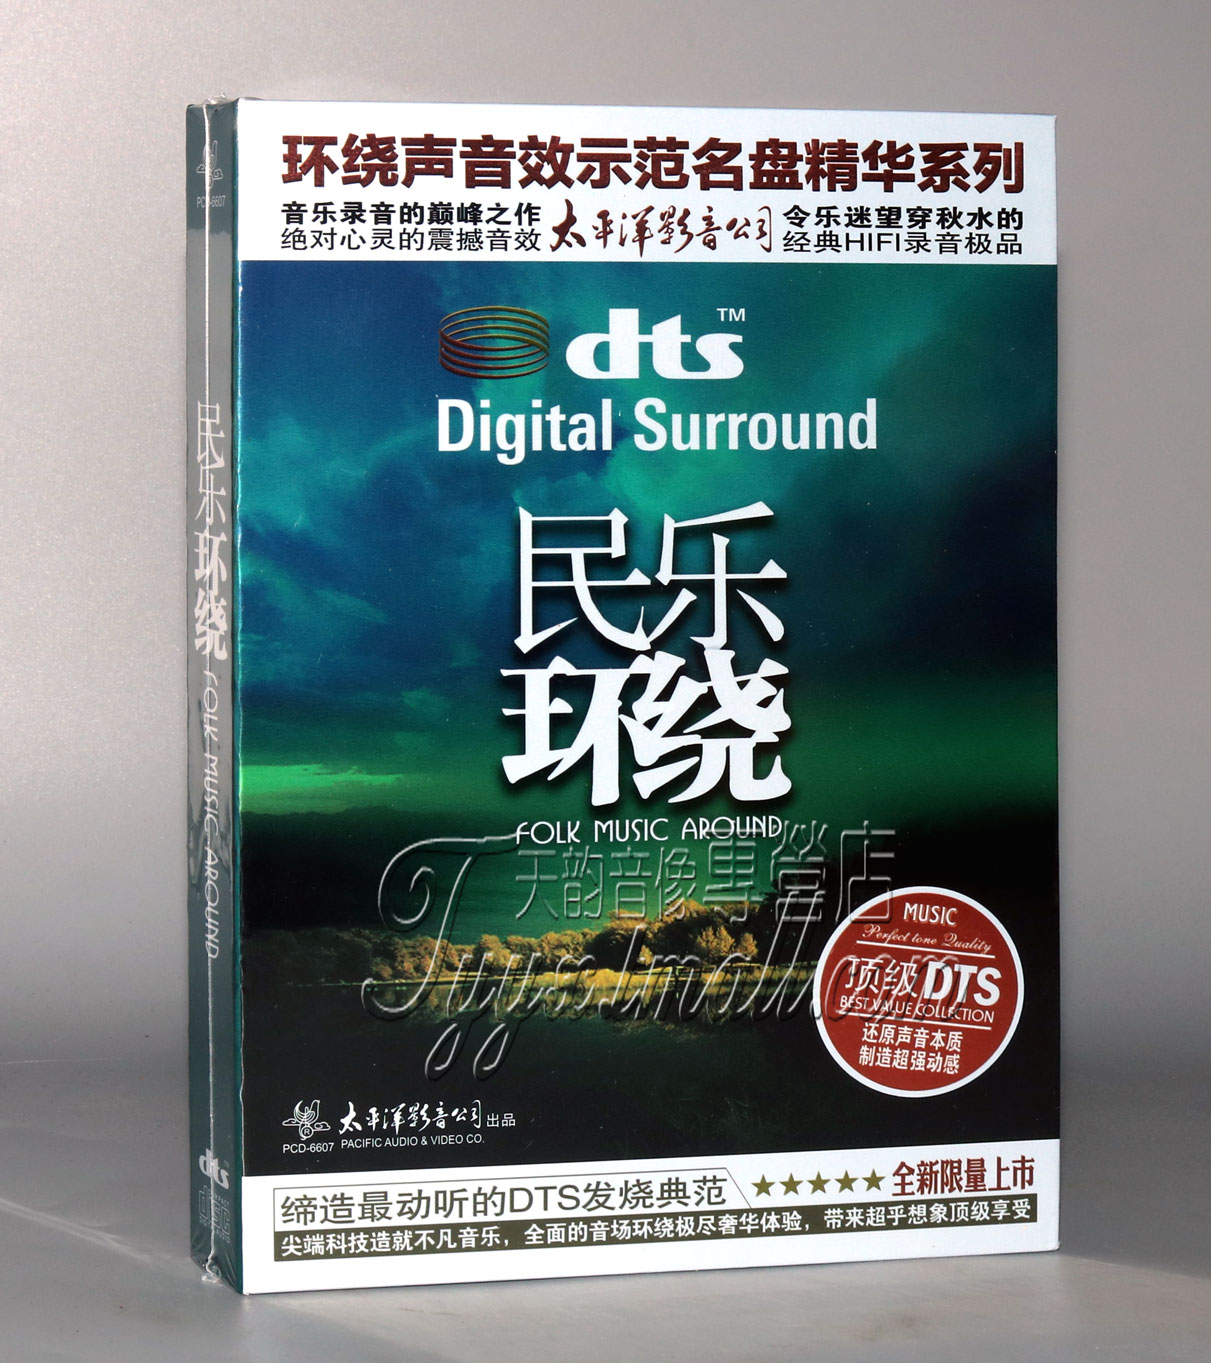 dts多声道试音碟 太平洋唱片 民乐环绕 1CD DTS 环绕声 乐器演奏